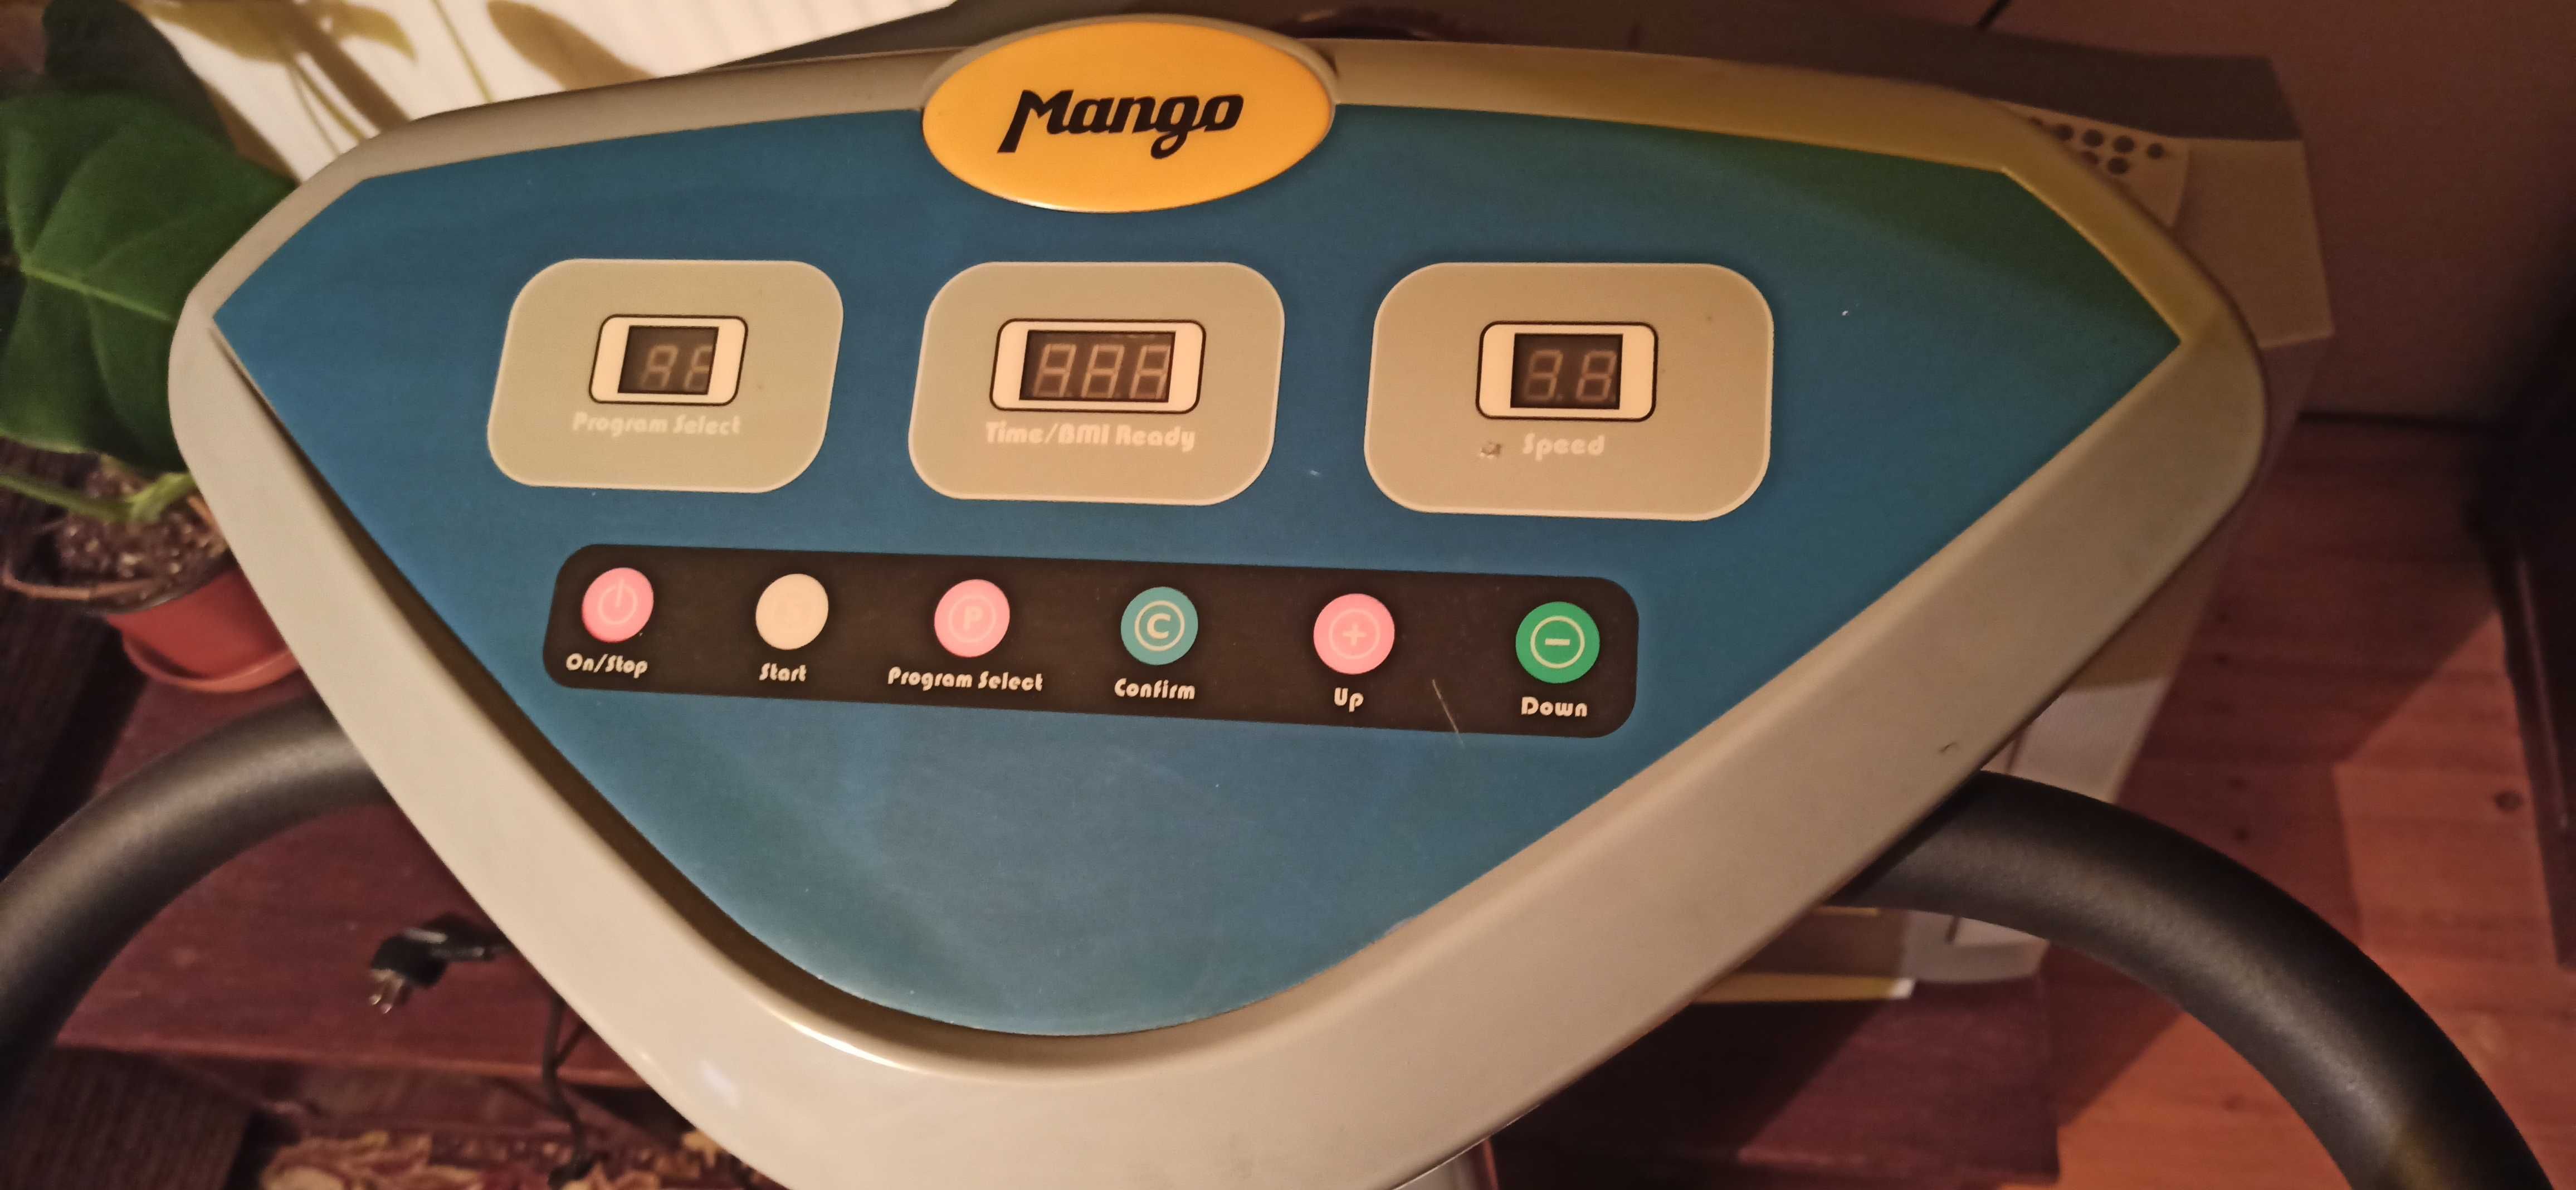 Vibro max mango - platforma wibracyjna fitness